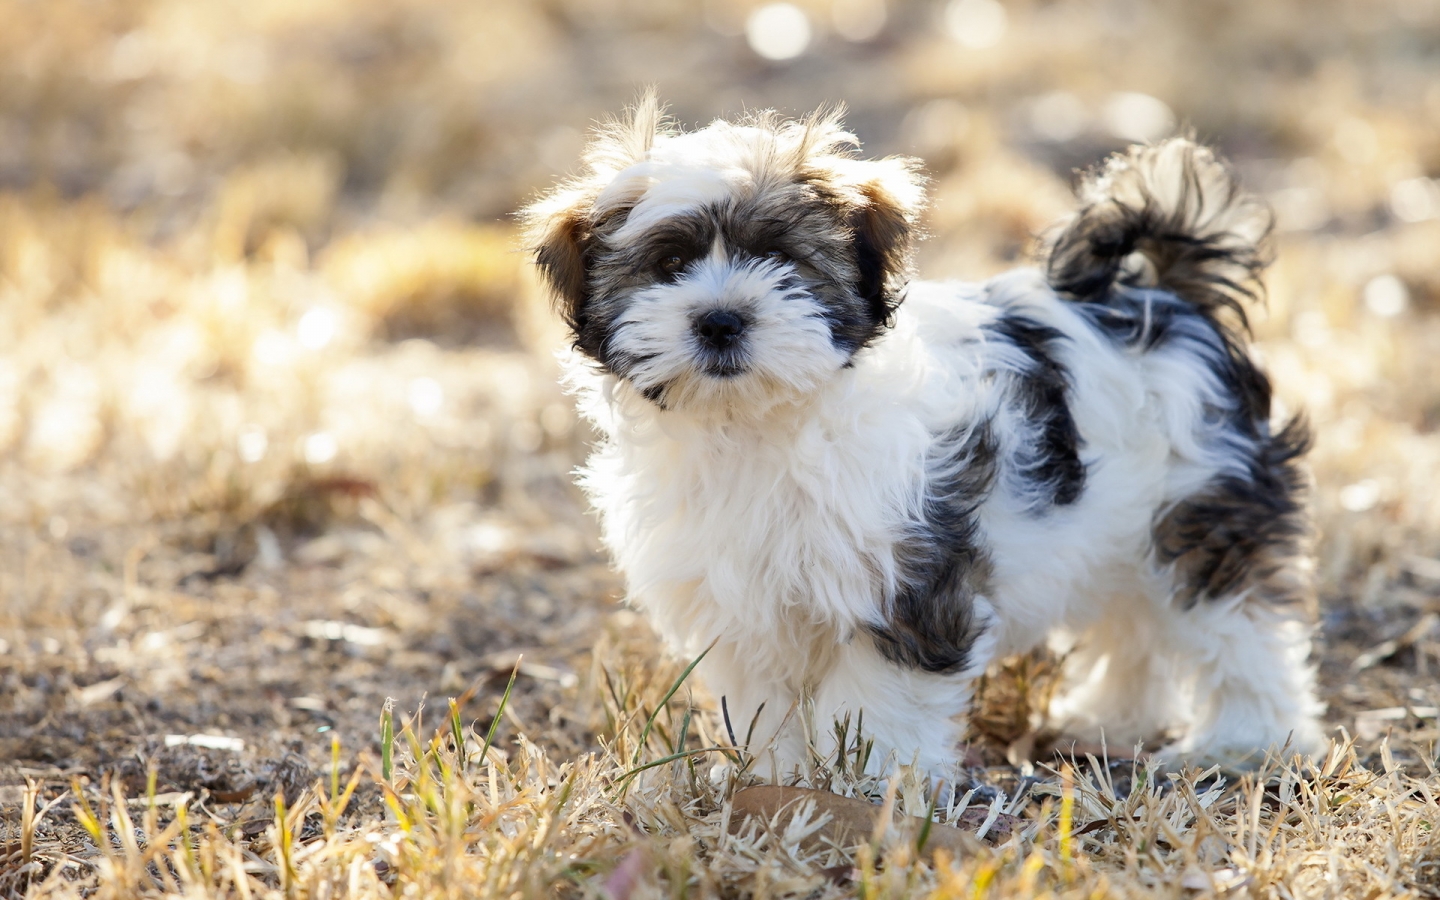 Cute Fluffy Dog for 1440 x 900 widescreen resolution